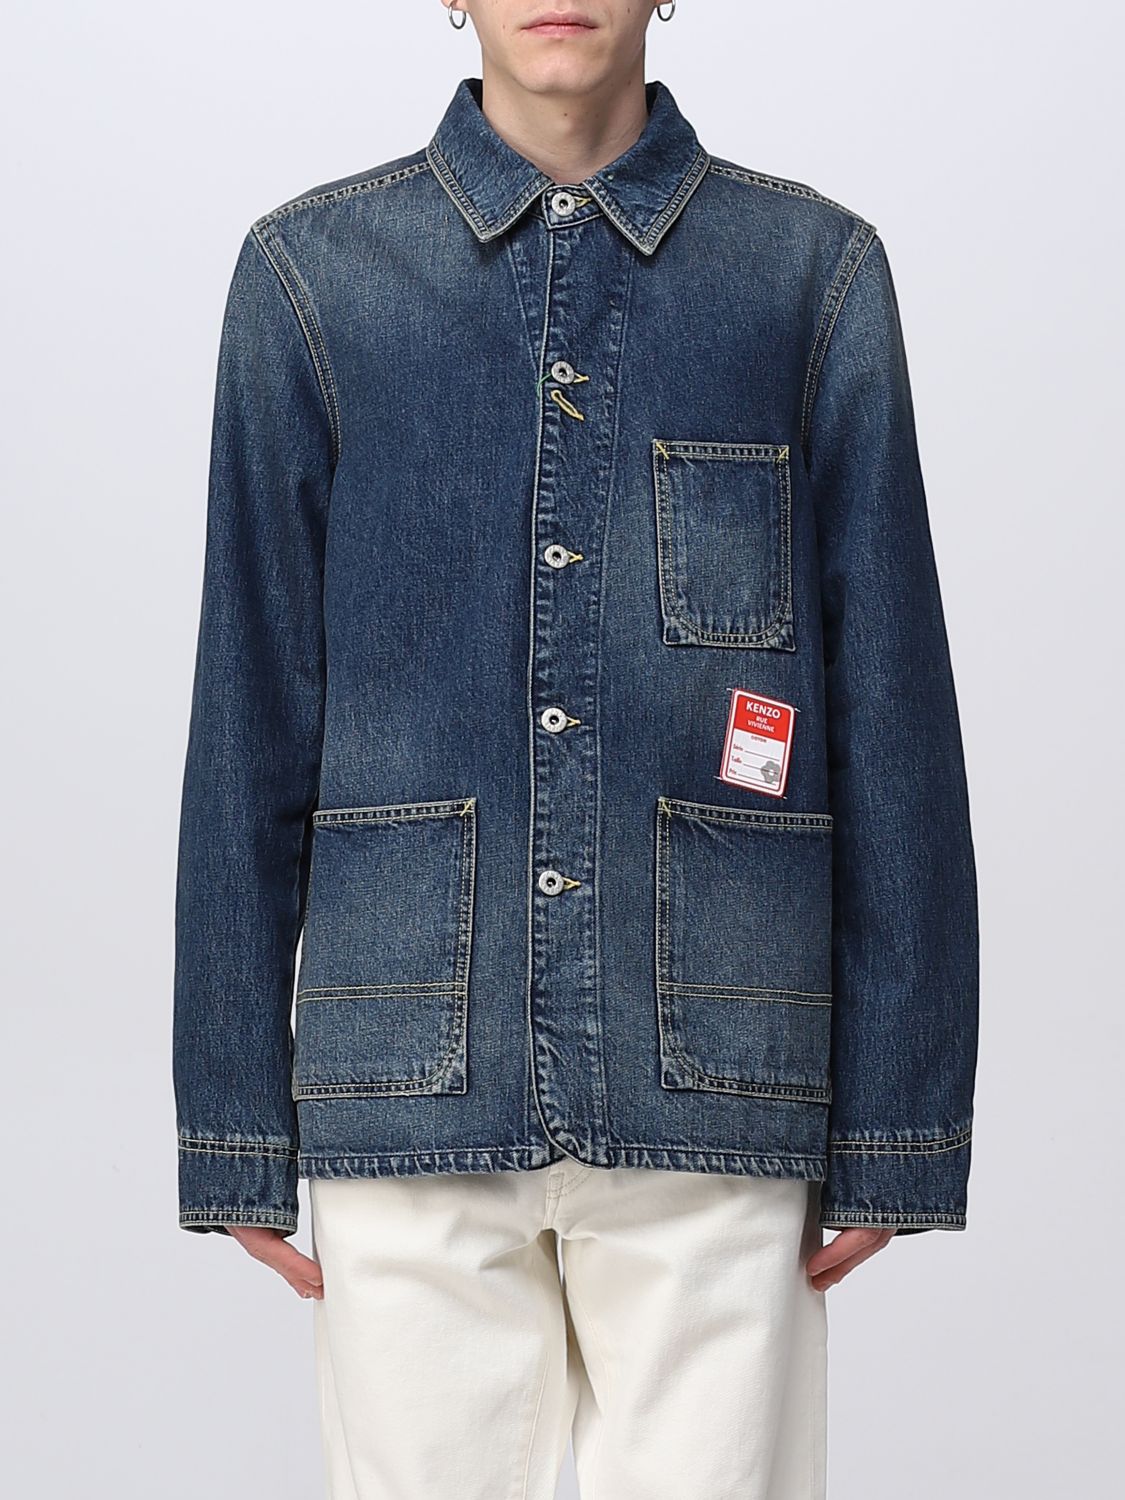 Kenzo Men's Printed Denim Jacket